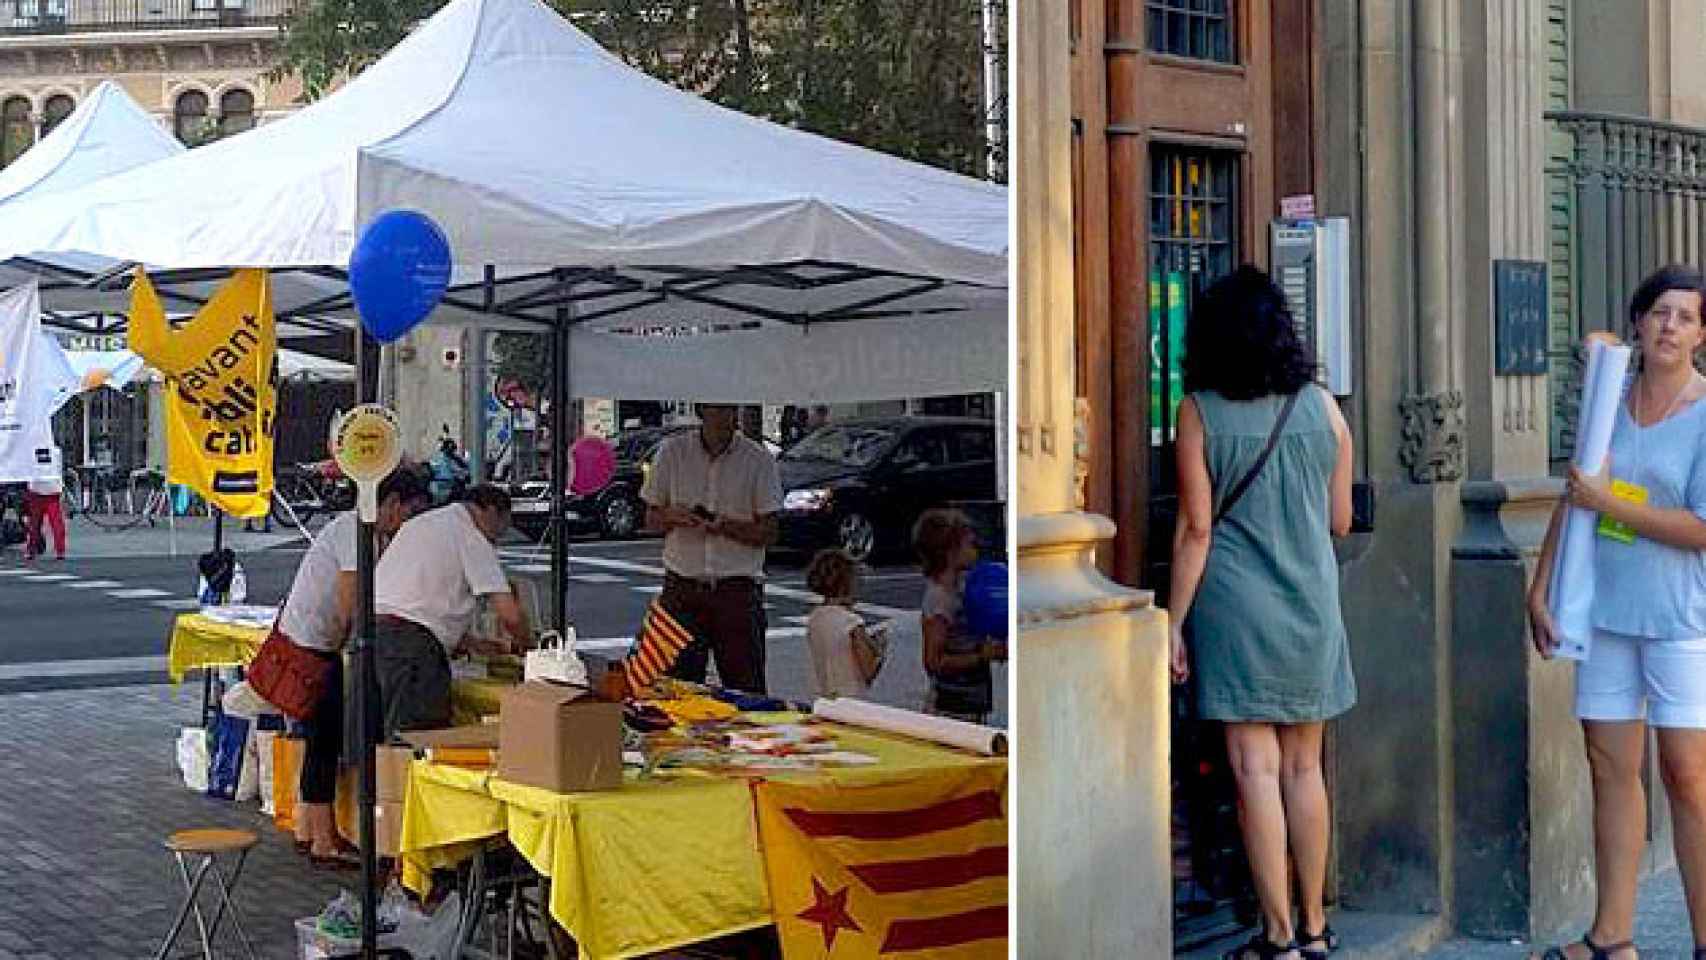 Tenderete de la Assemblea Nacional Catalana (ANC) junto a voluntarias que buscan complicidades independentistas puerta a puerta. / CG